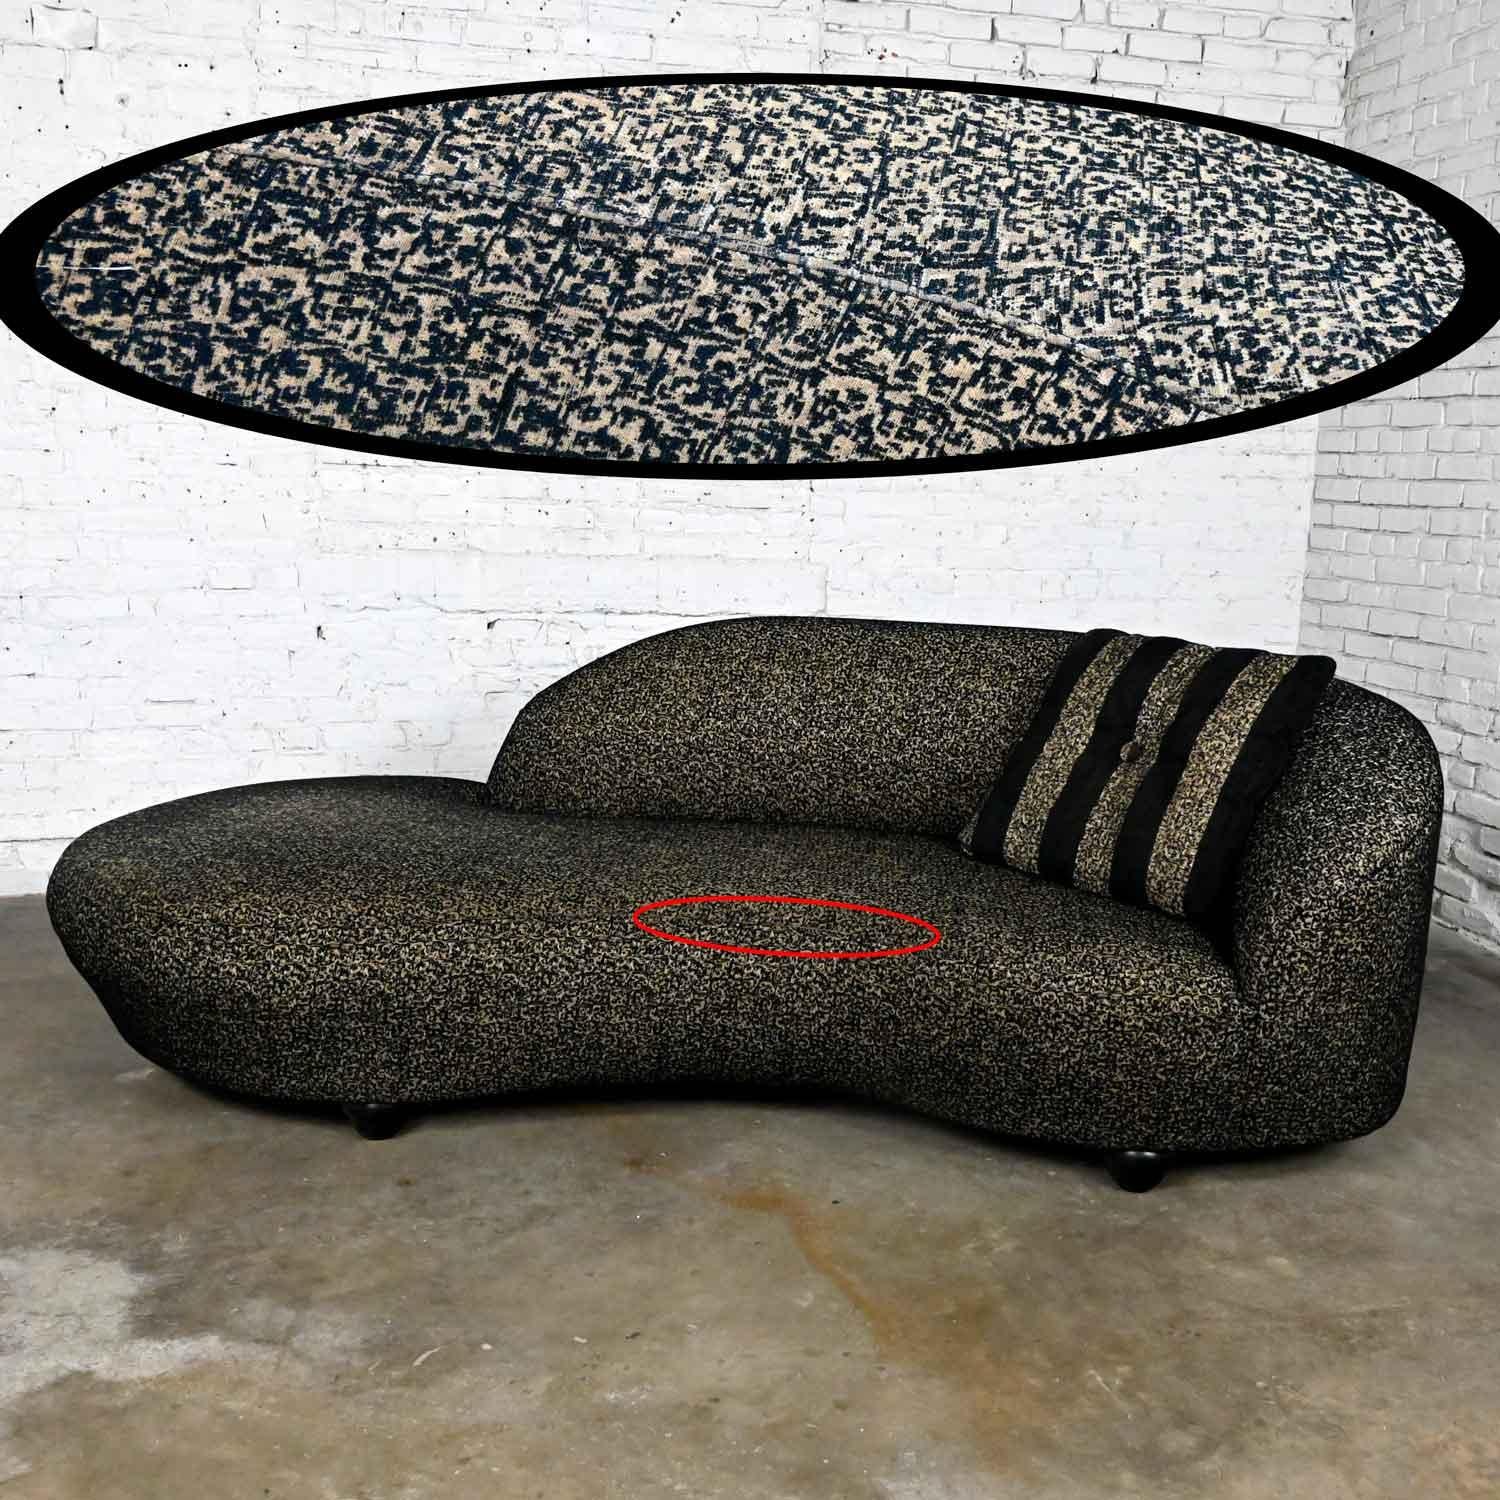 Postmodern Black & Khaki Sort of Animal Print Serpentine Cloud-Like Chaise Sofa For Sale 12